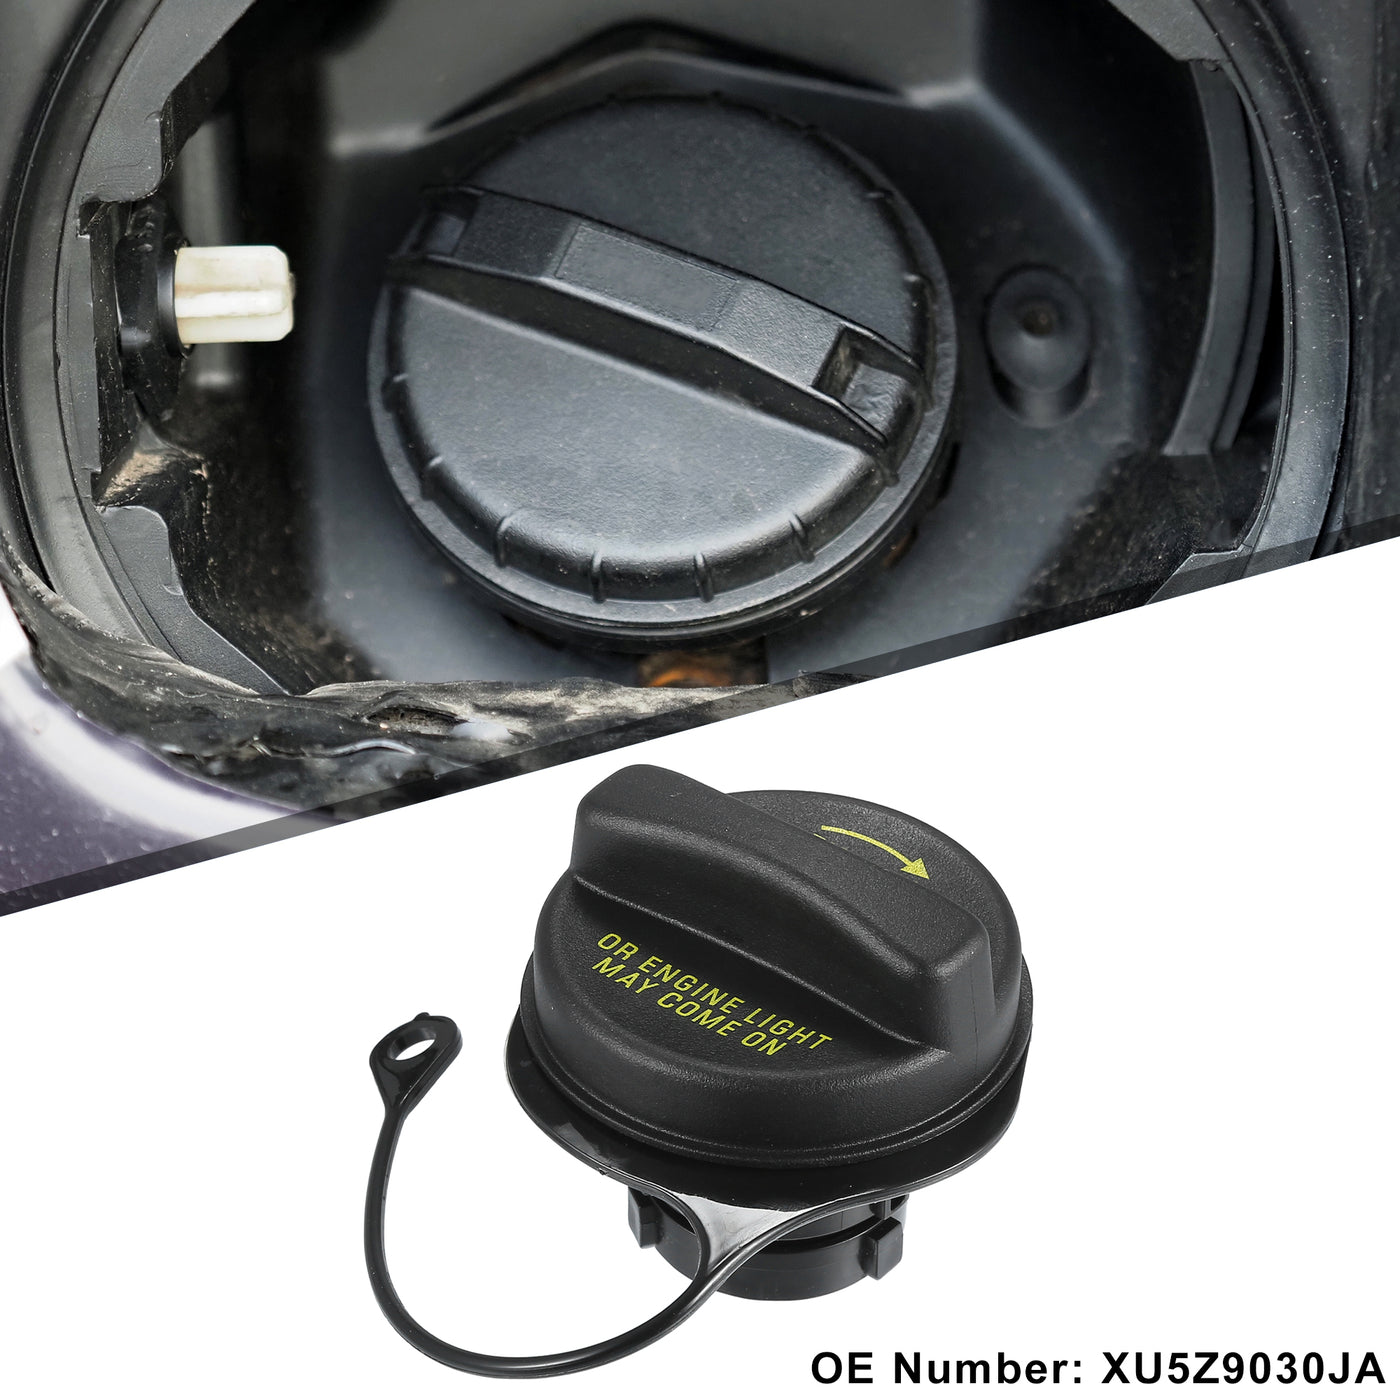 Motoforti Car Fuel Tank Filler Cover, Gas Tank Cap, for Ford Explorer 1997-2004, ABS, No.XU5Z9030JA, Black